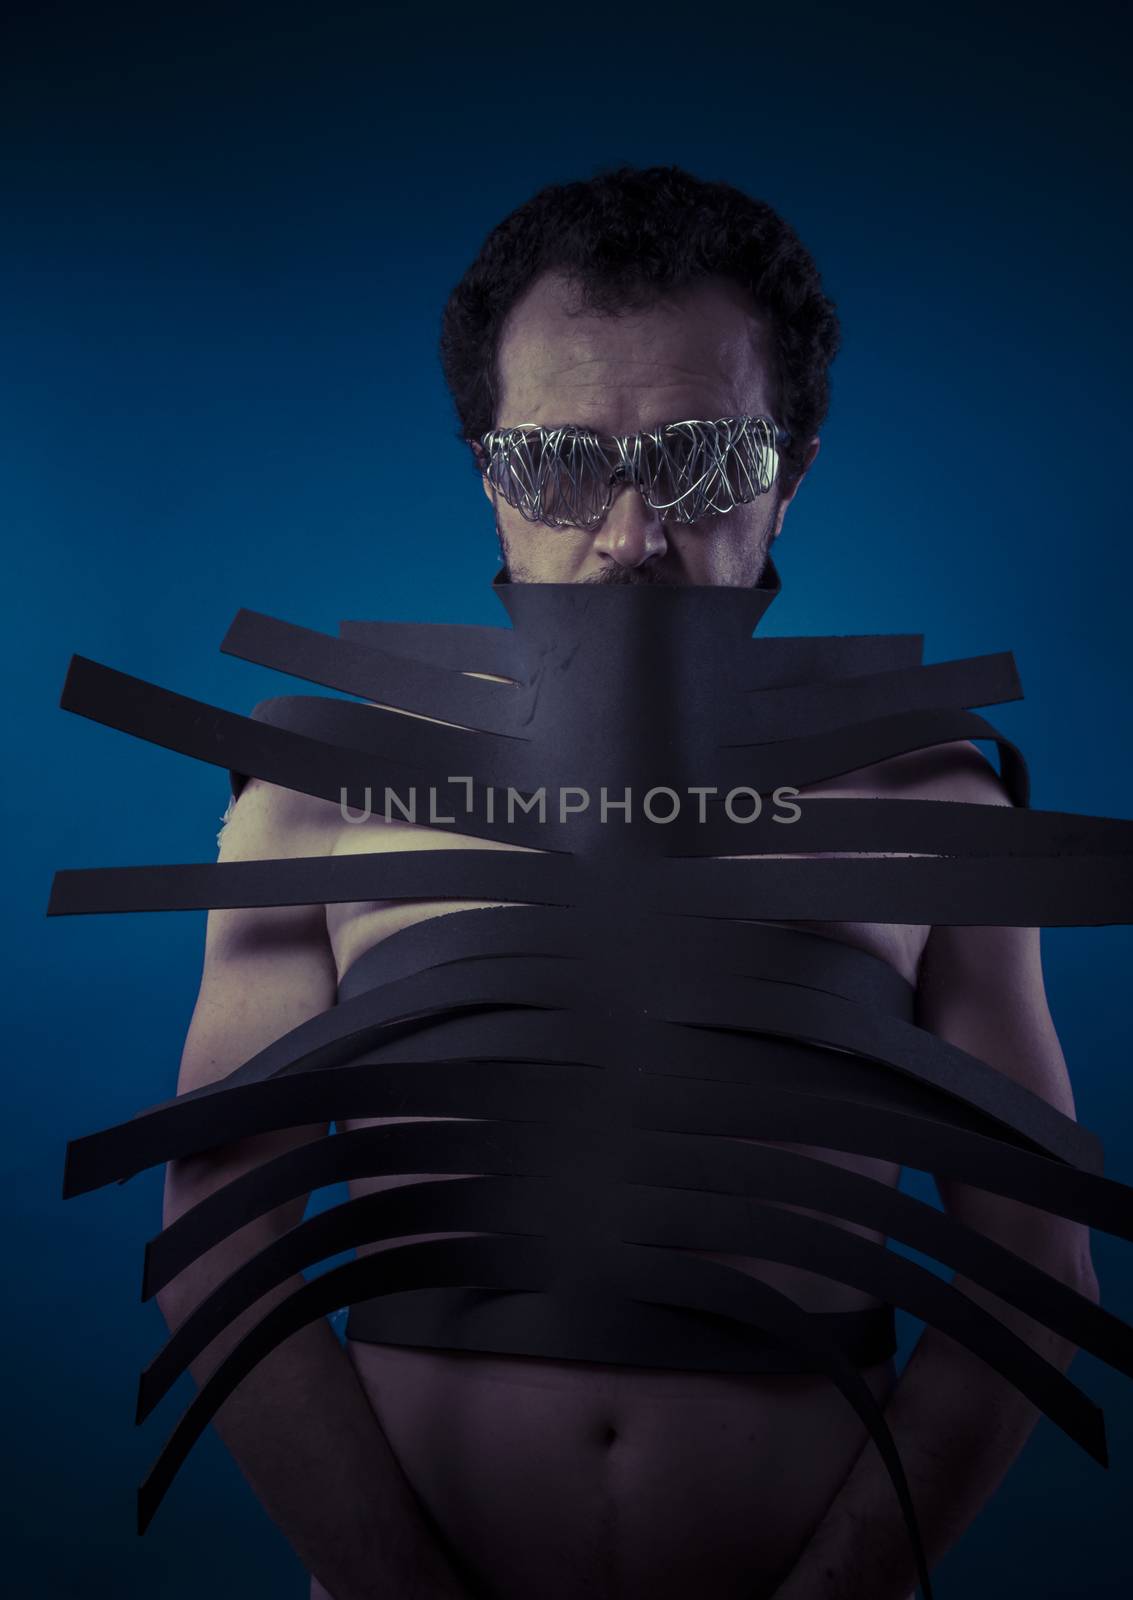 Bdsm, man covered with black strips, shibari concept art